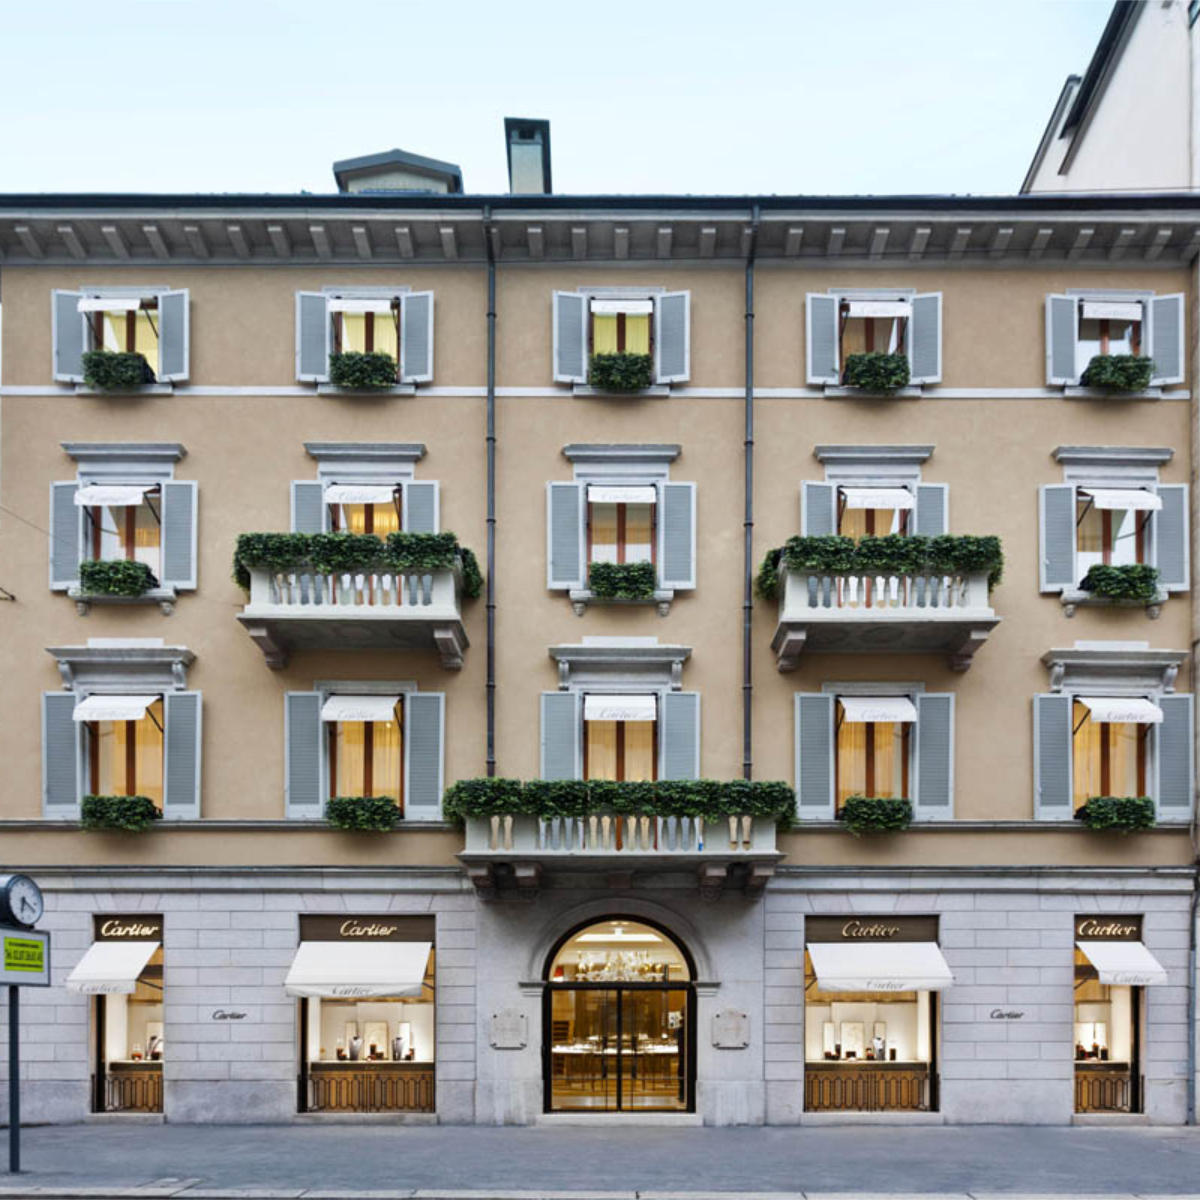 Boutique Cartier in Milan: sumptuous and minimal - Interni Magazine